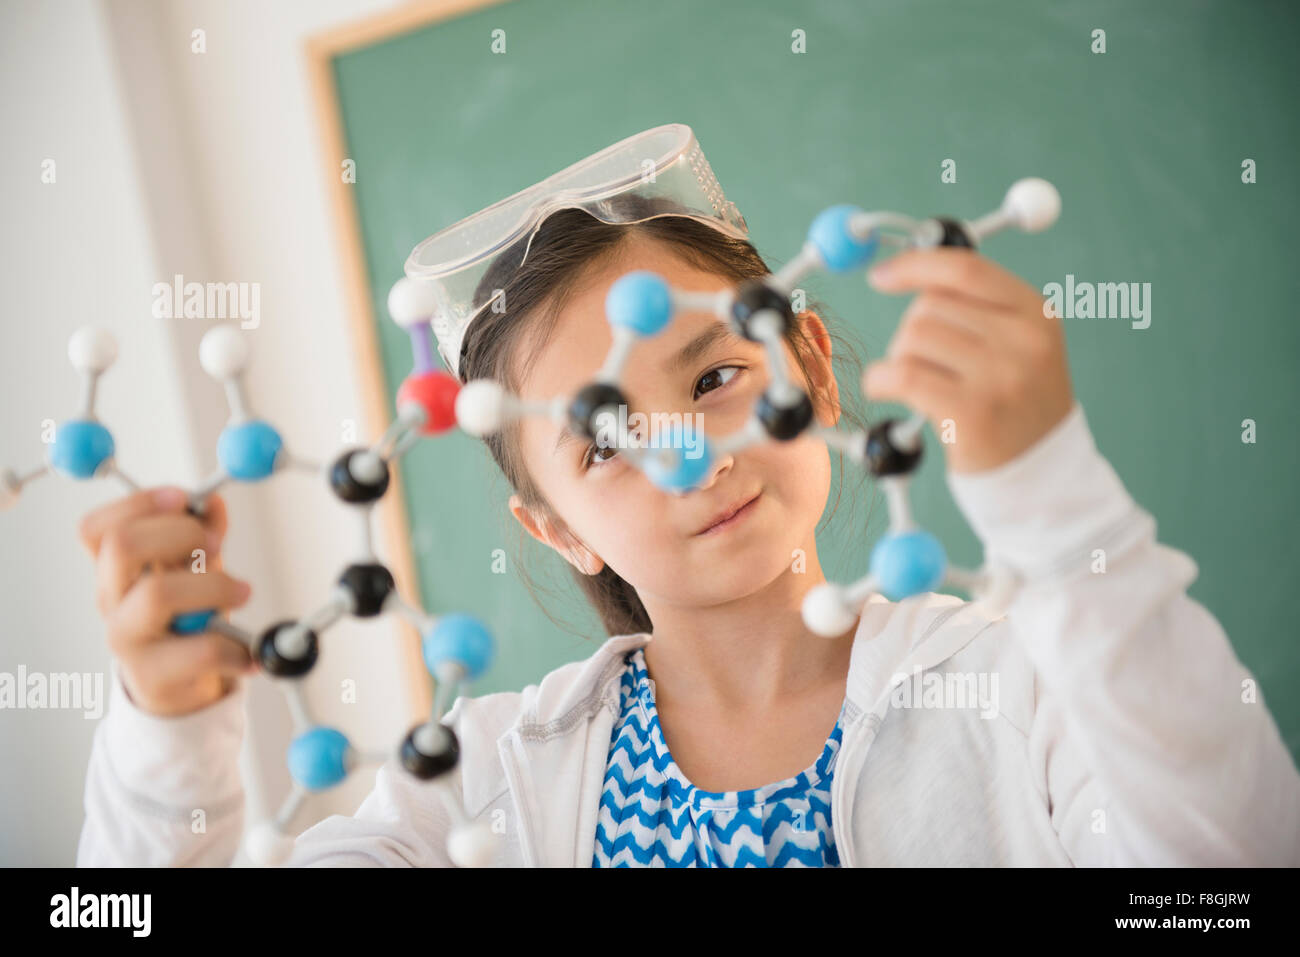 Girl examining molecular model in science class Stock Photo